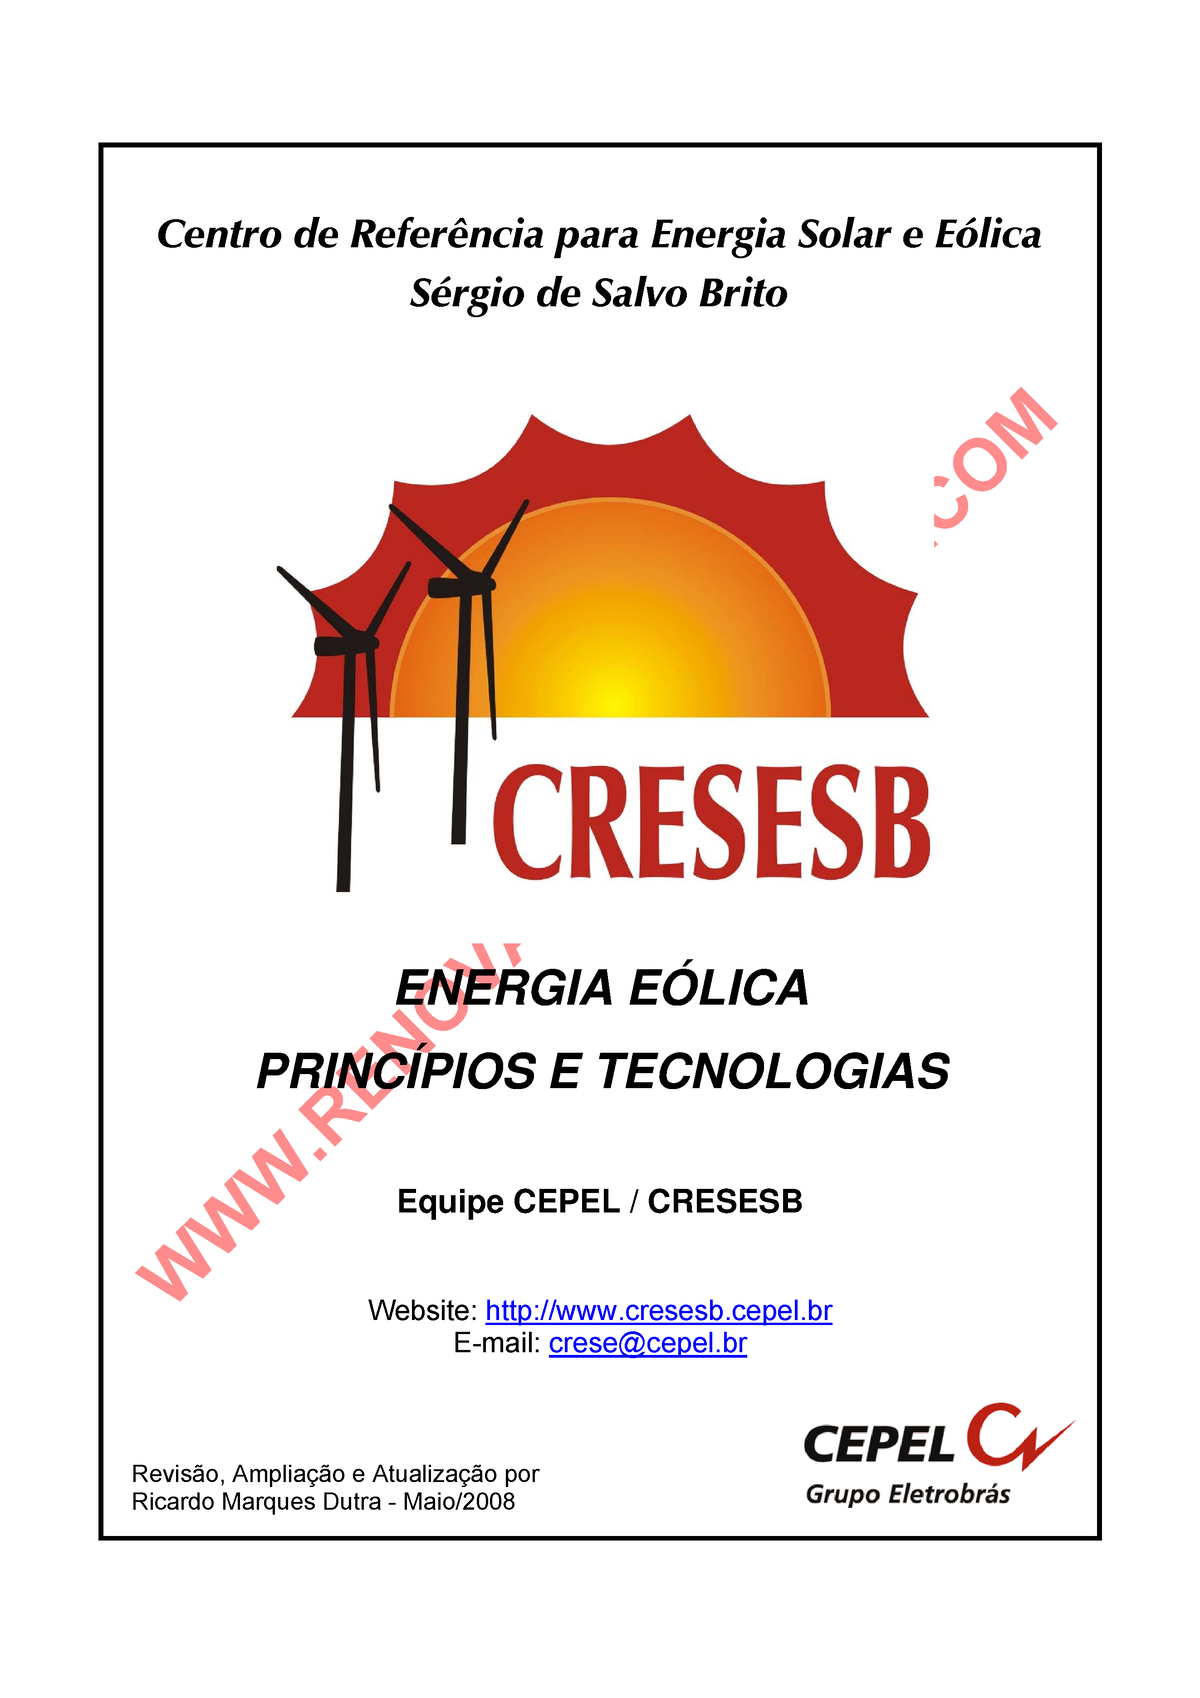 CRESESB-Centro de Referência para Energia Solar e Eólica